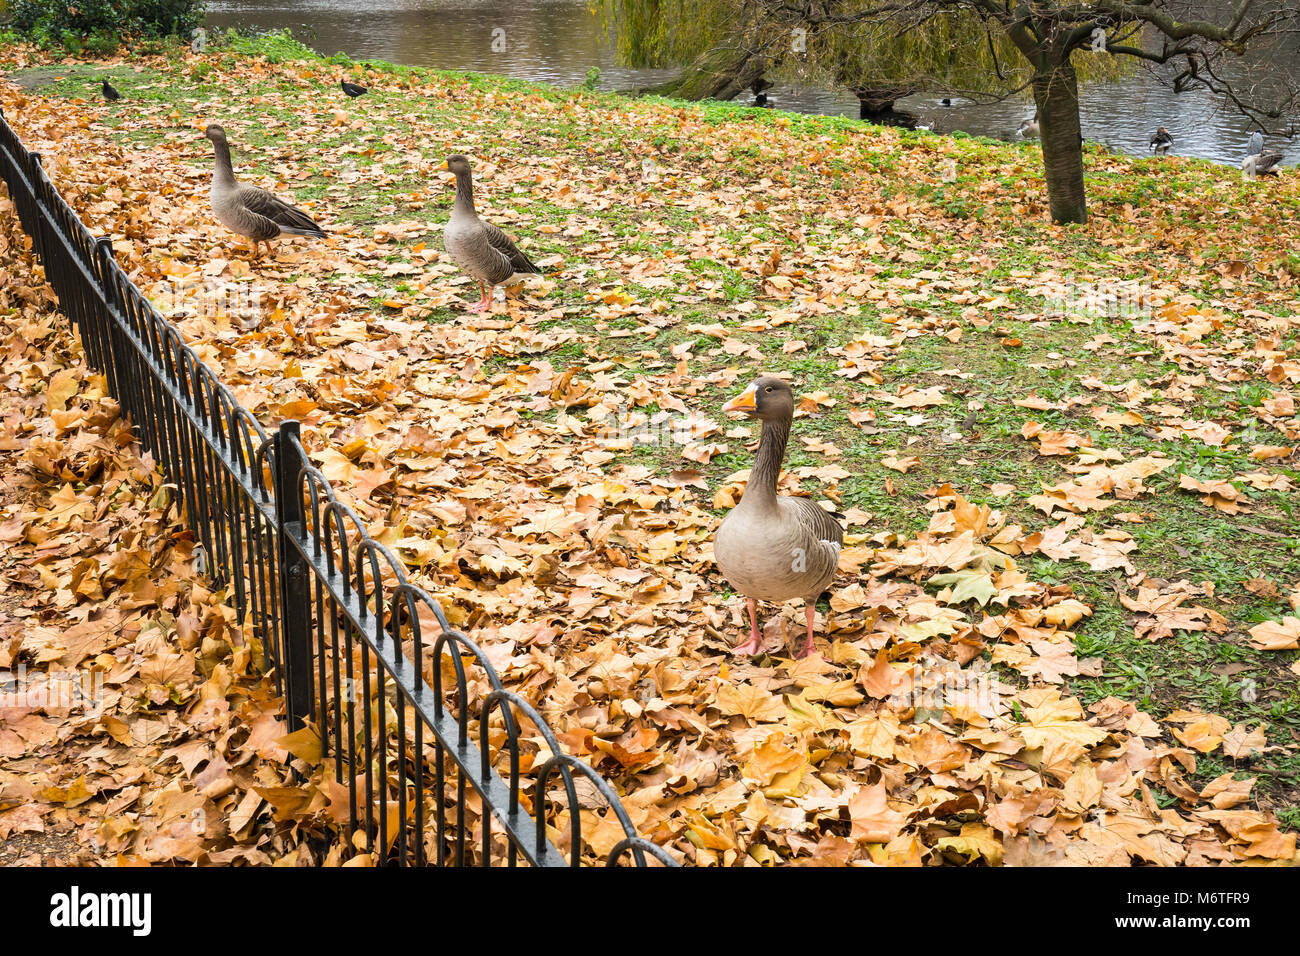 Ducks and Birds on Autumn Leaves Stock Photo